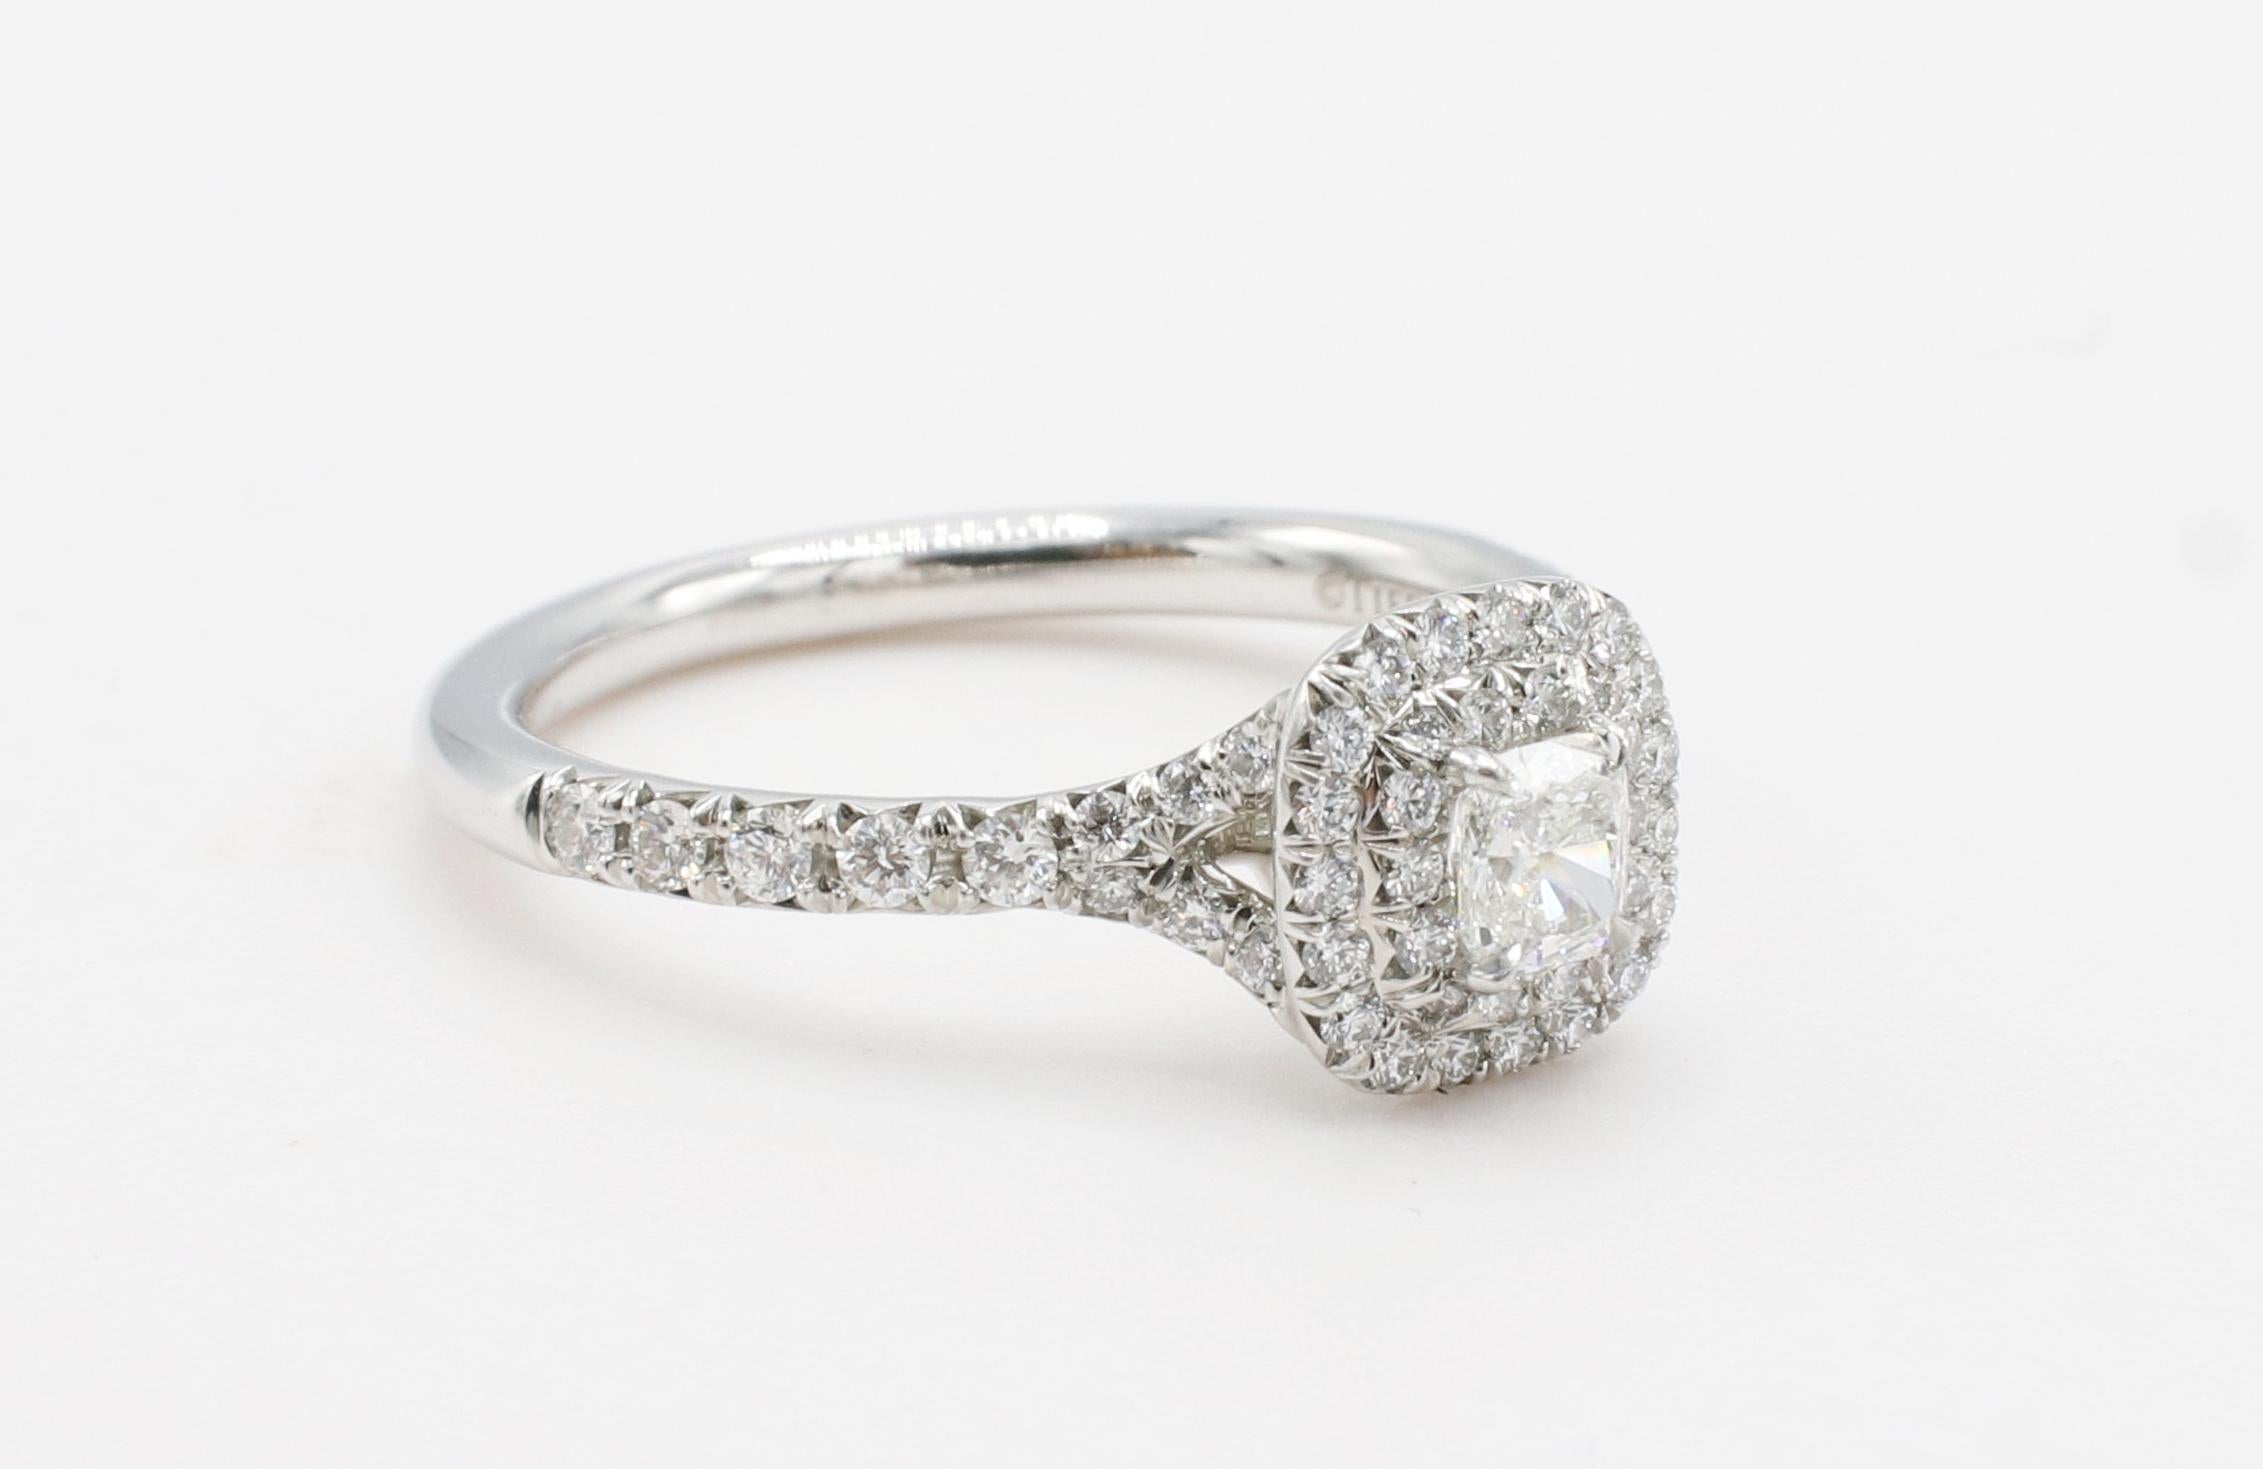 Tiffany & Co. Soleste Cushion Double Row Halo Diamond Engagement Ring
Diamond: .22 carat cushion F VVS2
Accent diamonds: .25 CTW D-G IF - VS2 round brilliant diamonds
Metal: Platinum
Weight: 4.34 grams
Size: 6 (US)
Top: 7.5 x 7.5mm
Retail: $4,700